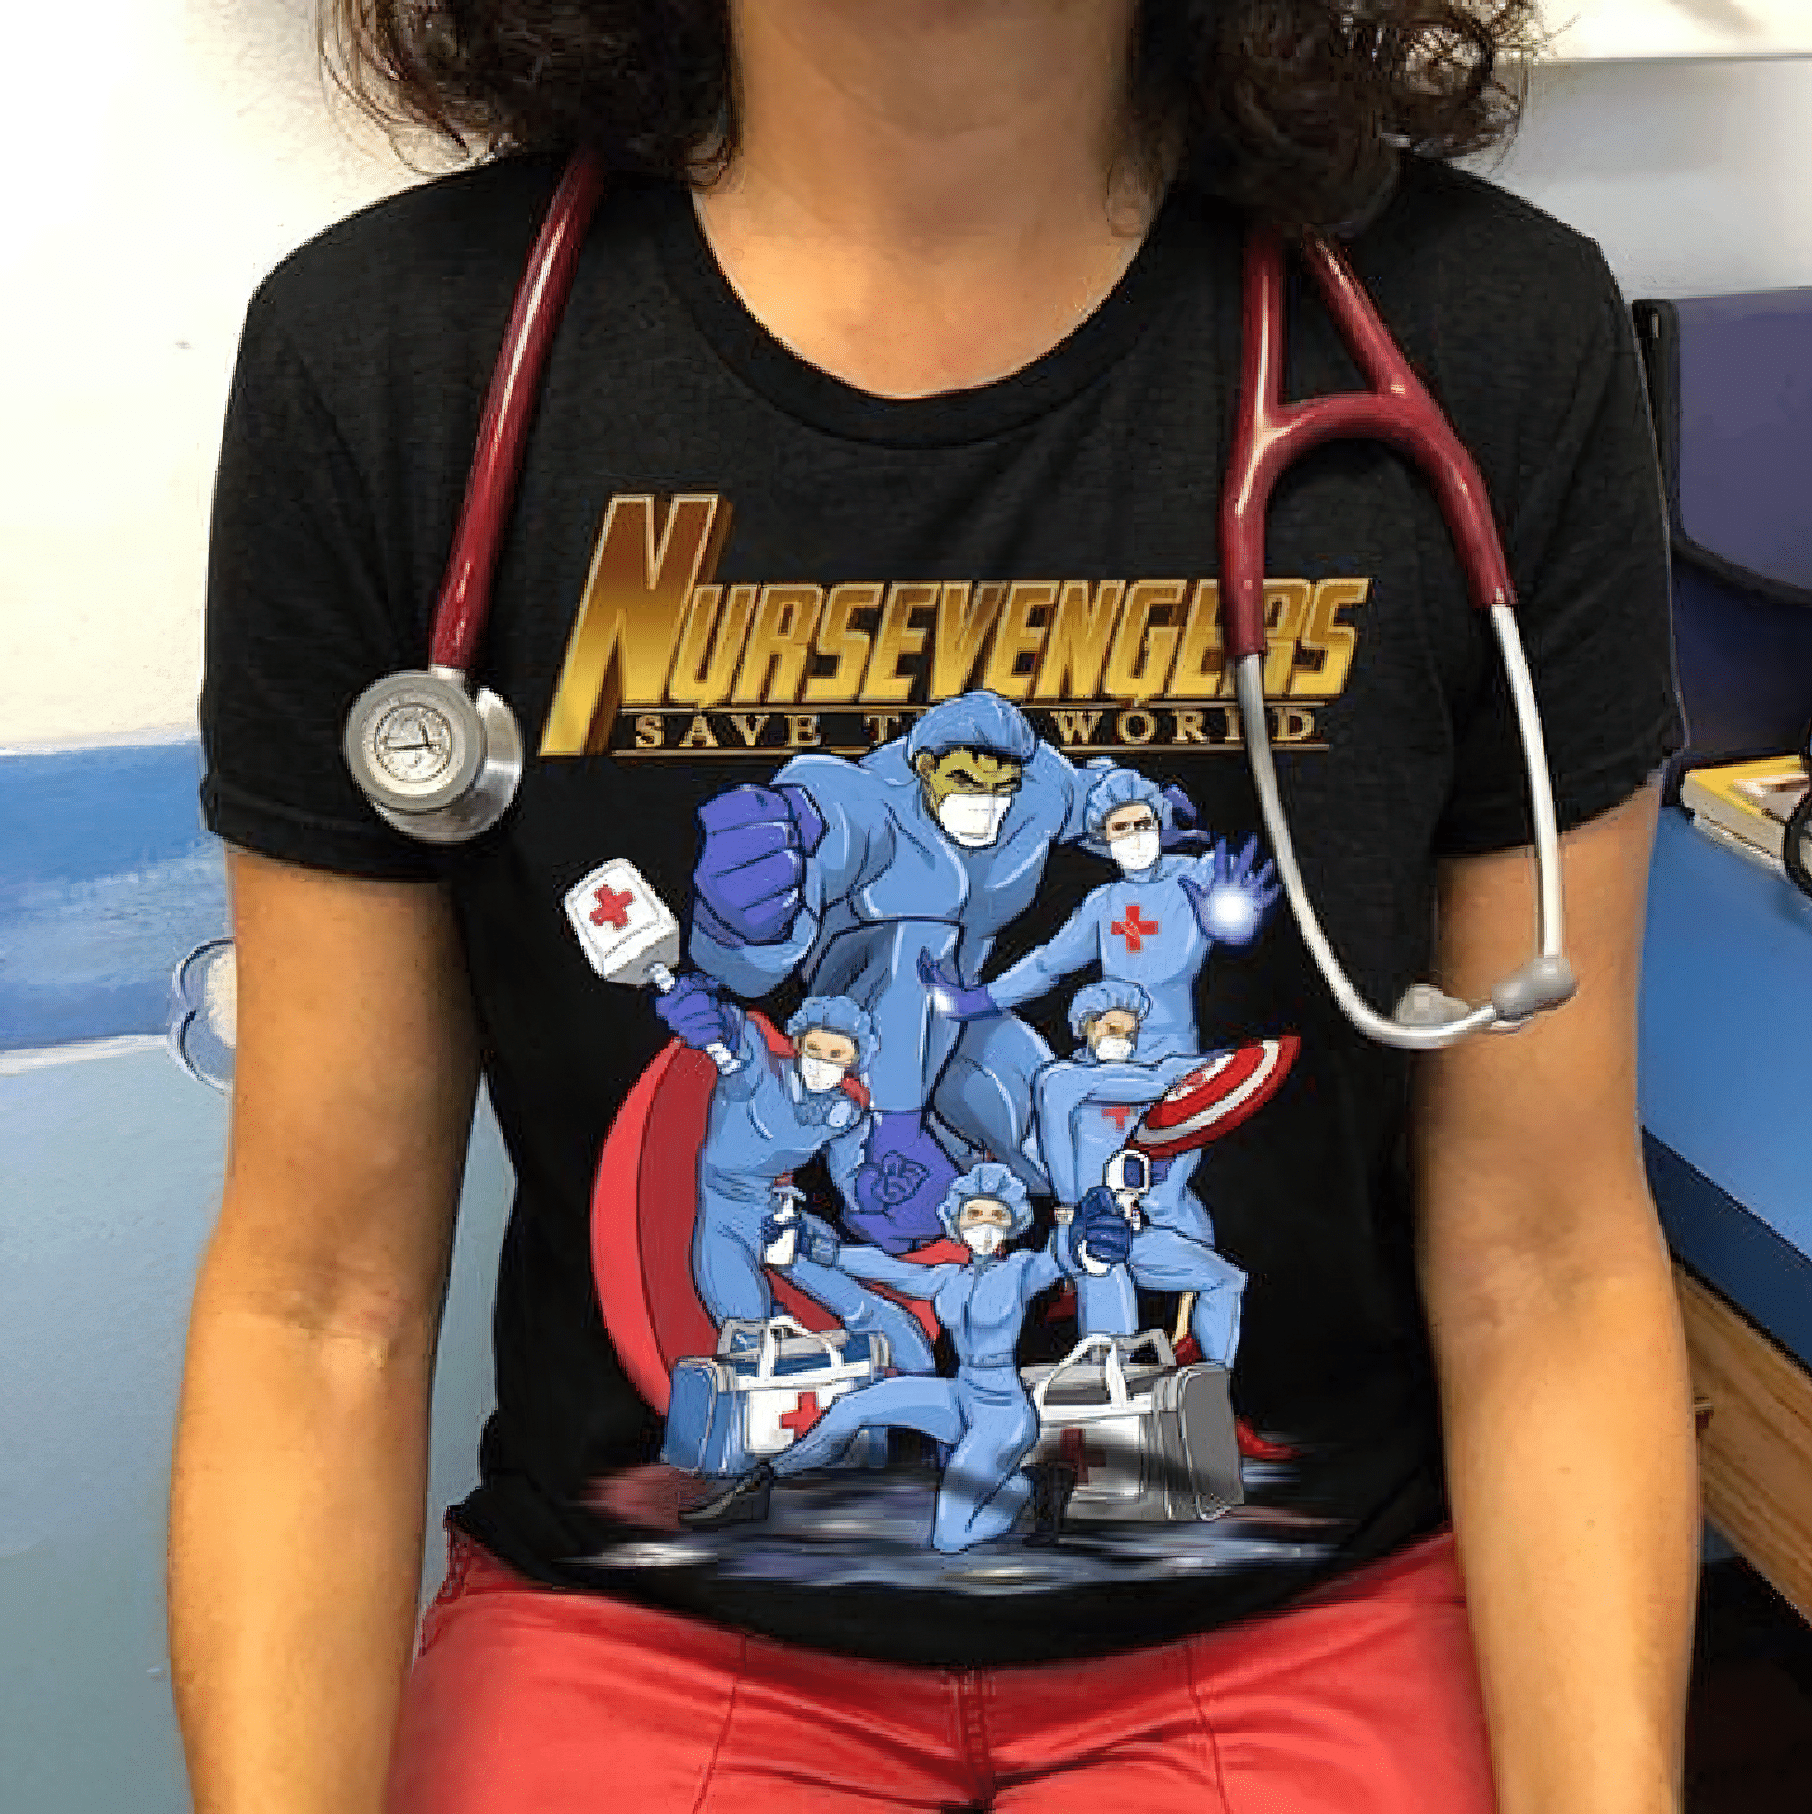 PresentsPrints, Perfect Marvel Avengers Nursevengers Save The World, Nurse T-Shirt